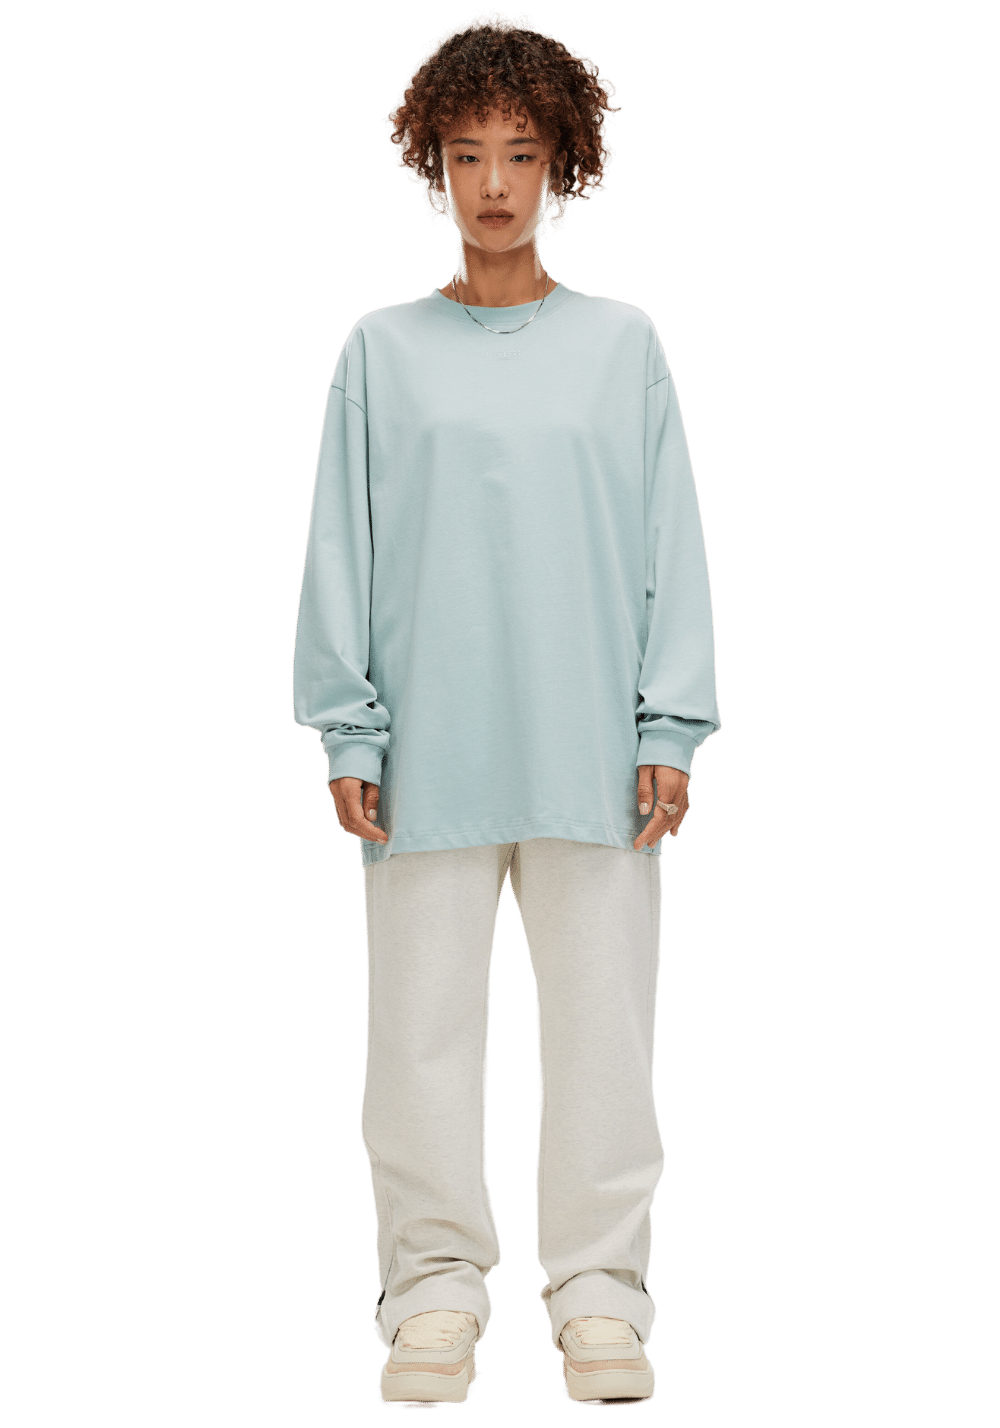 Mesh Grid Basic Sweatshirt - PSYLOS 1, Mesh Grid Basic Sweatshirt, Sweatshirts, Boneless, PSYLOS 1